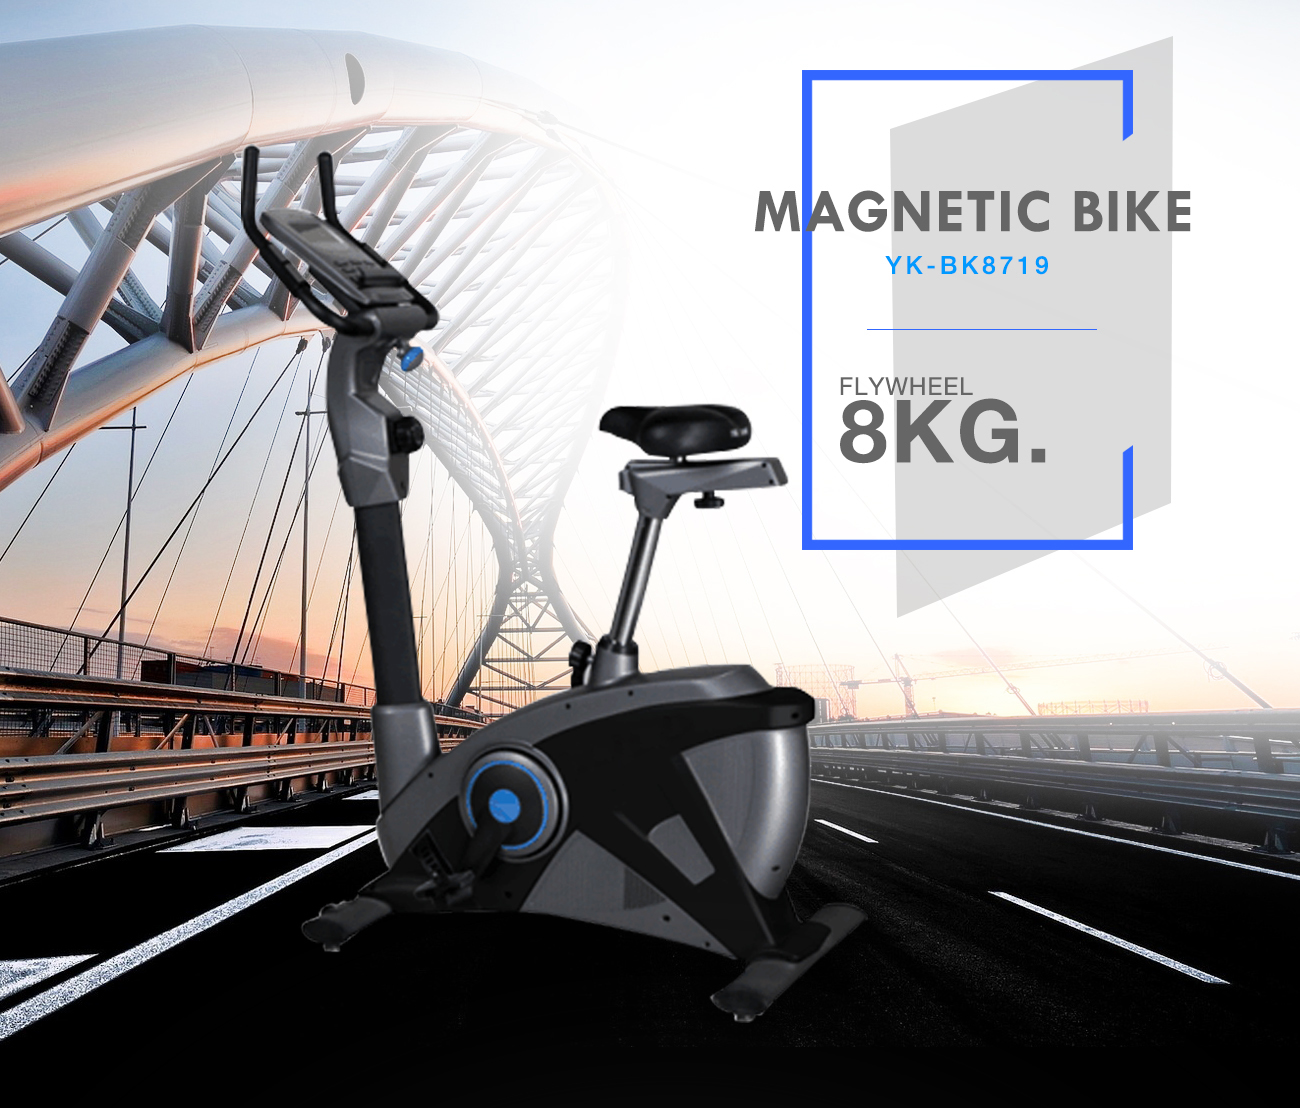 Magnetic Upright Bike YK-BK8719 Flywheel 8KG.